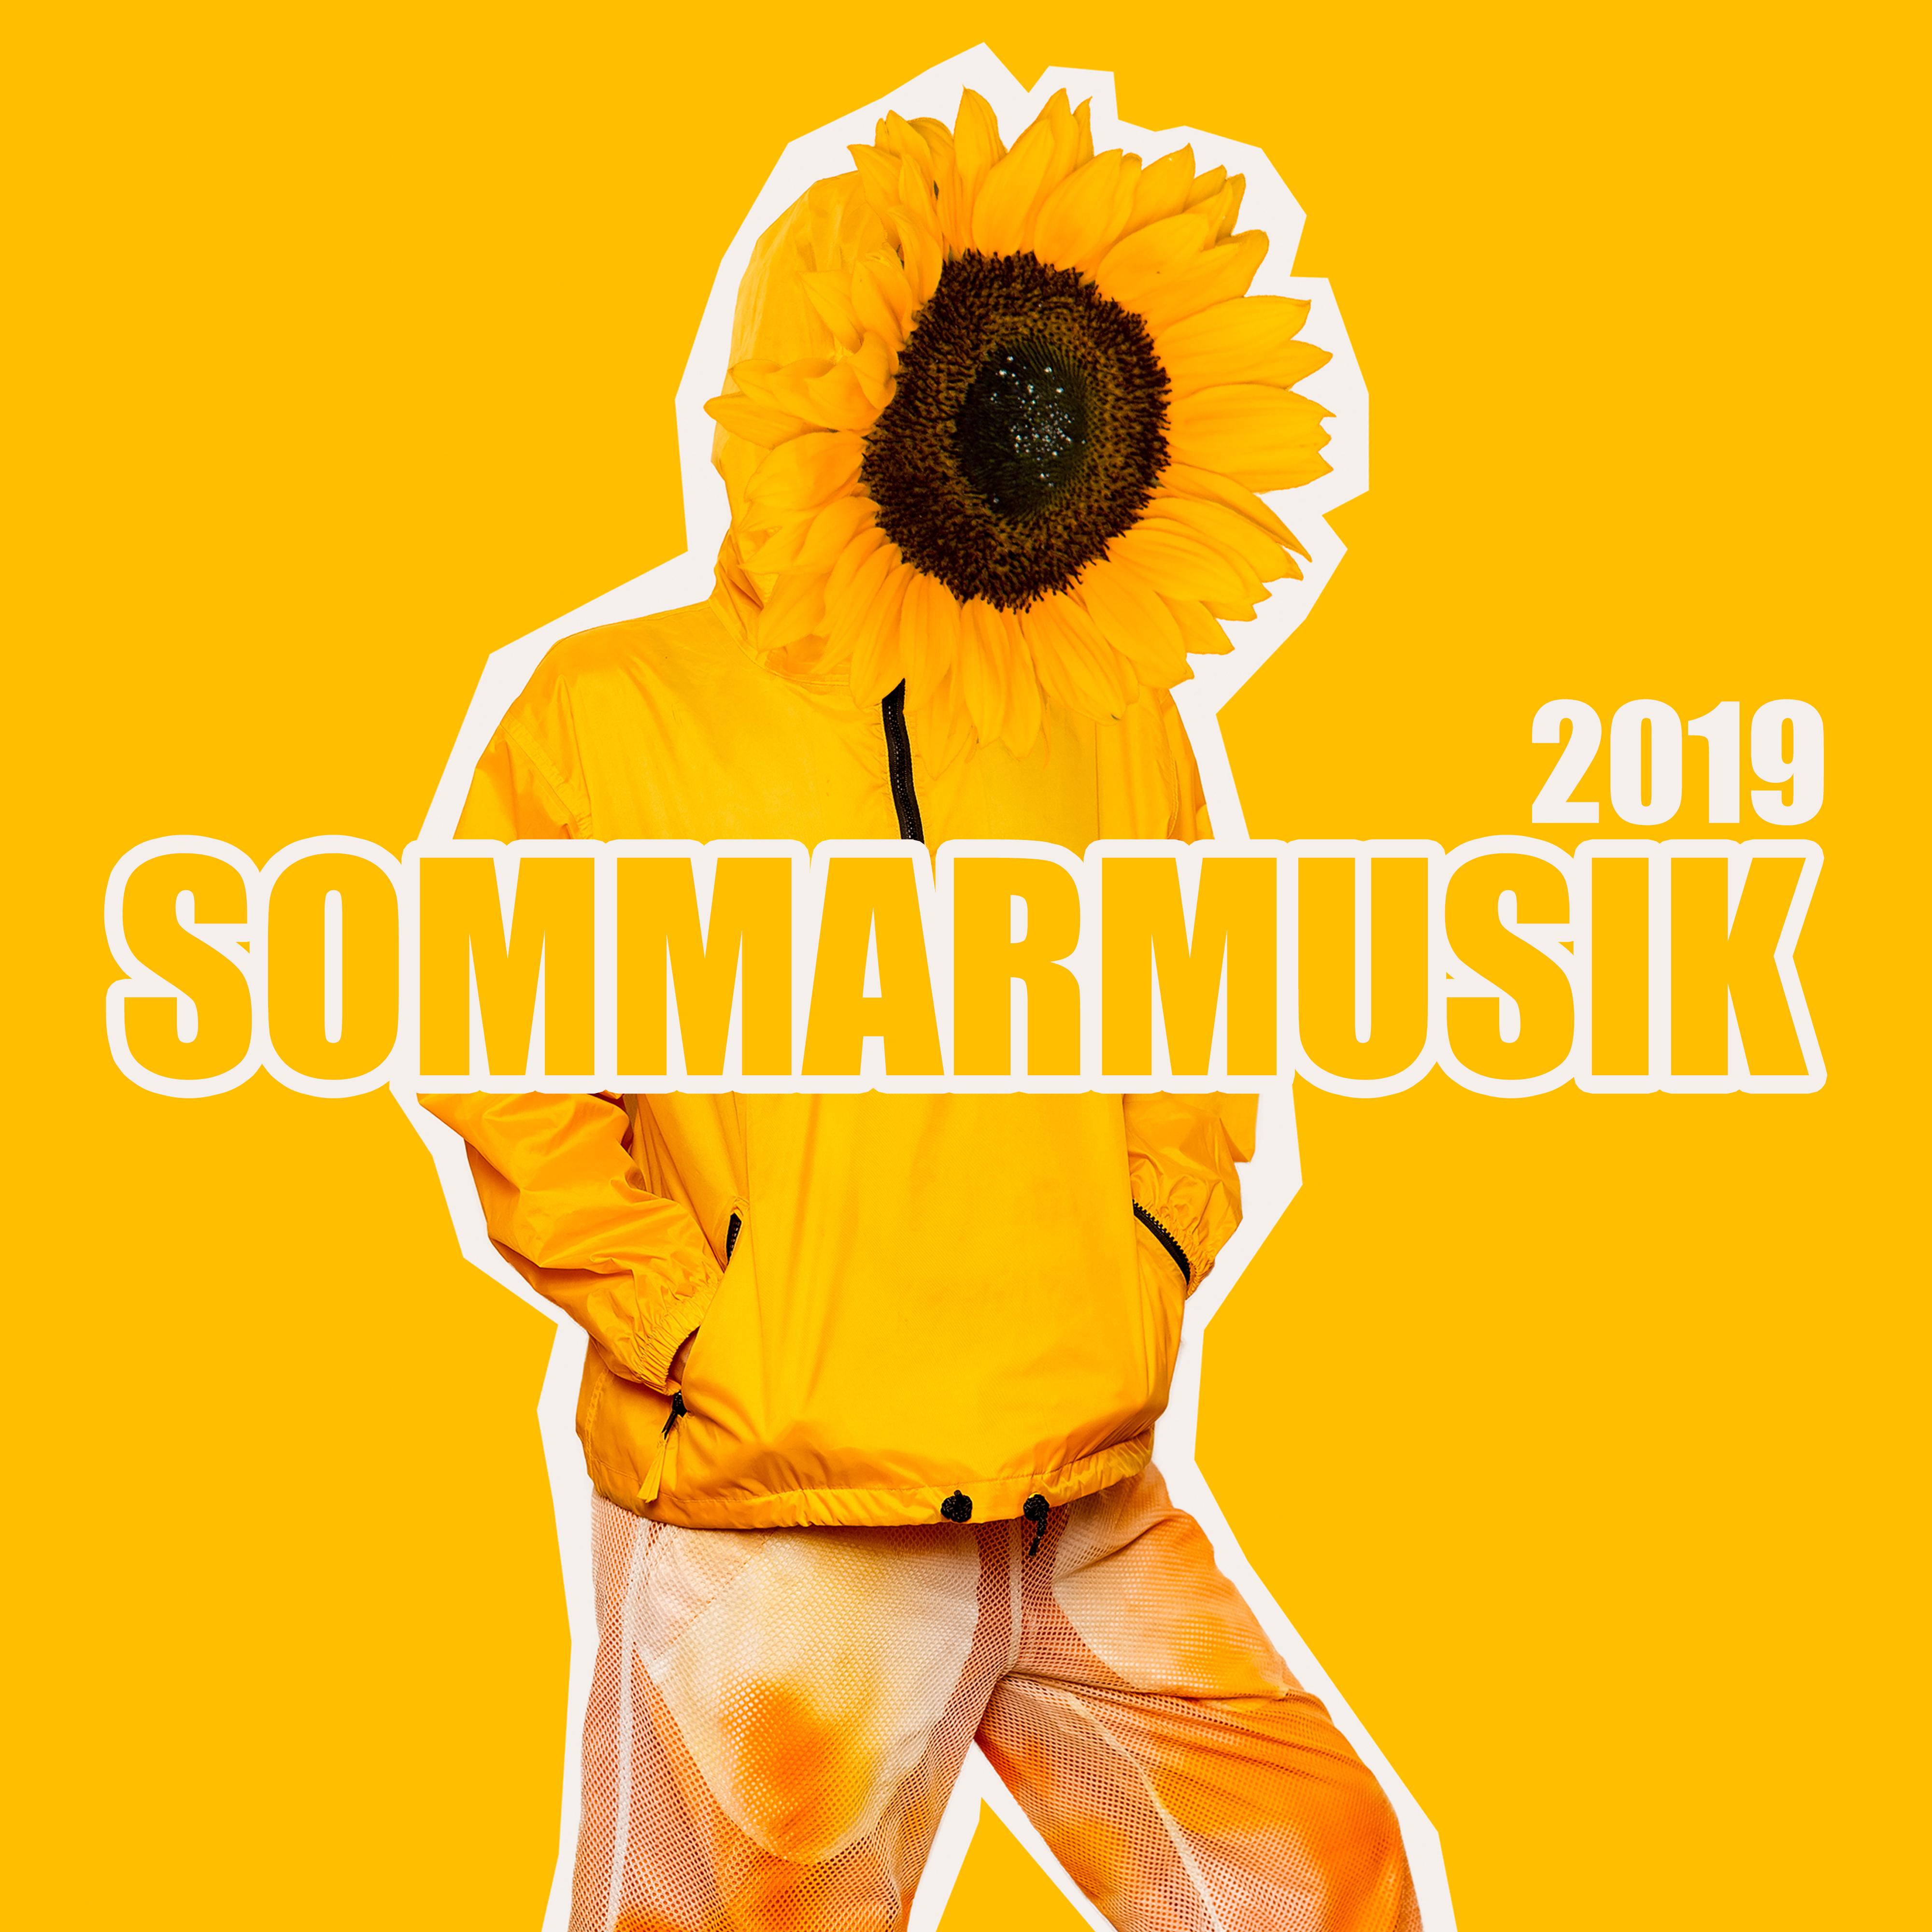 Sommarmusik 2019 – Lounge Music, Festmusik, Strandmusik, Ibiza Chill Out